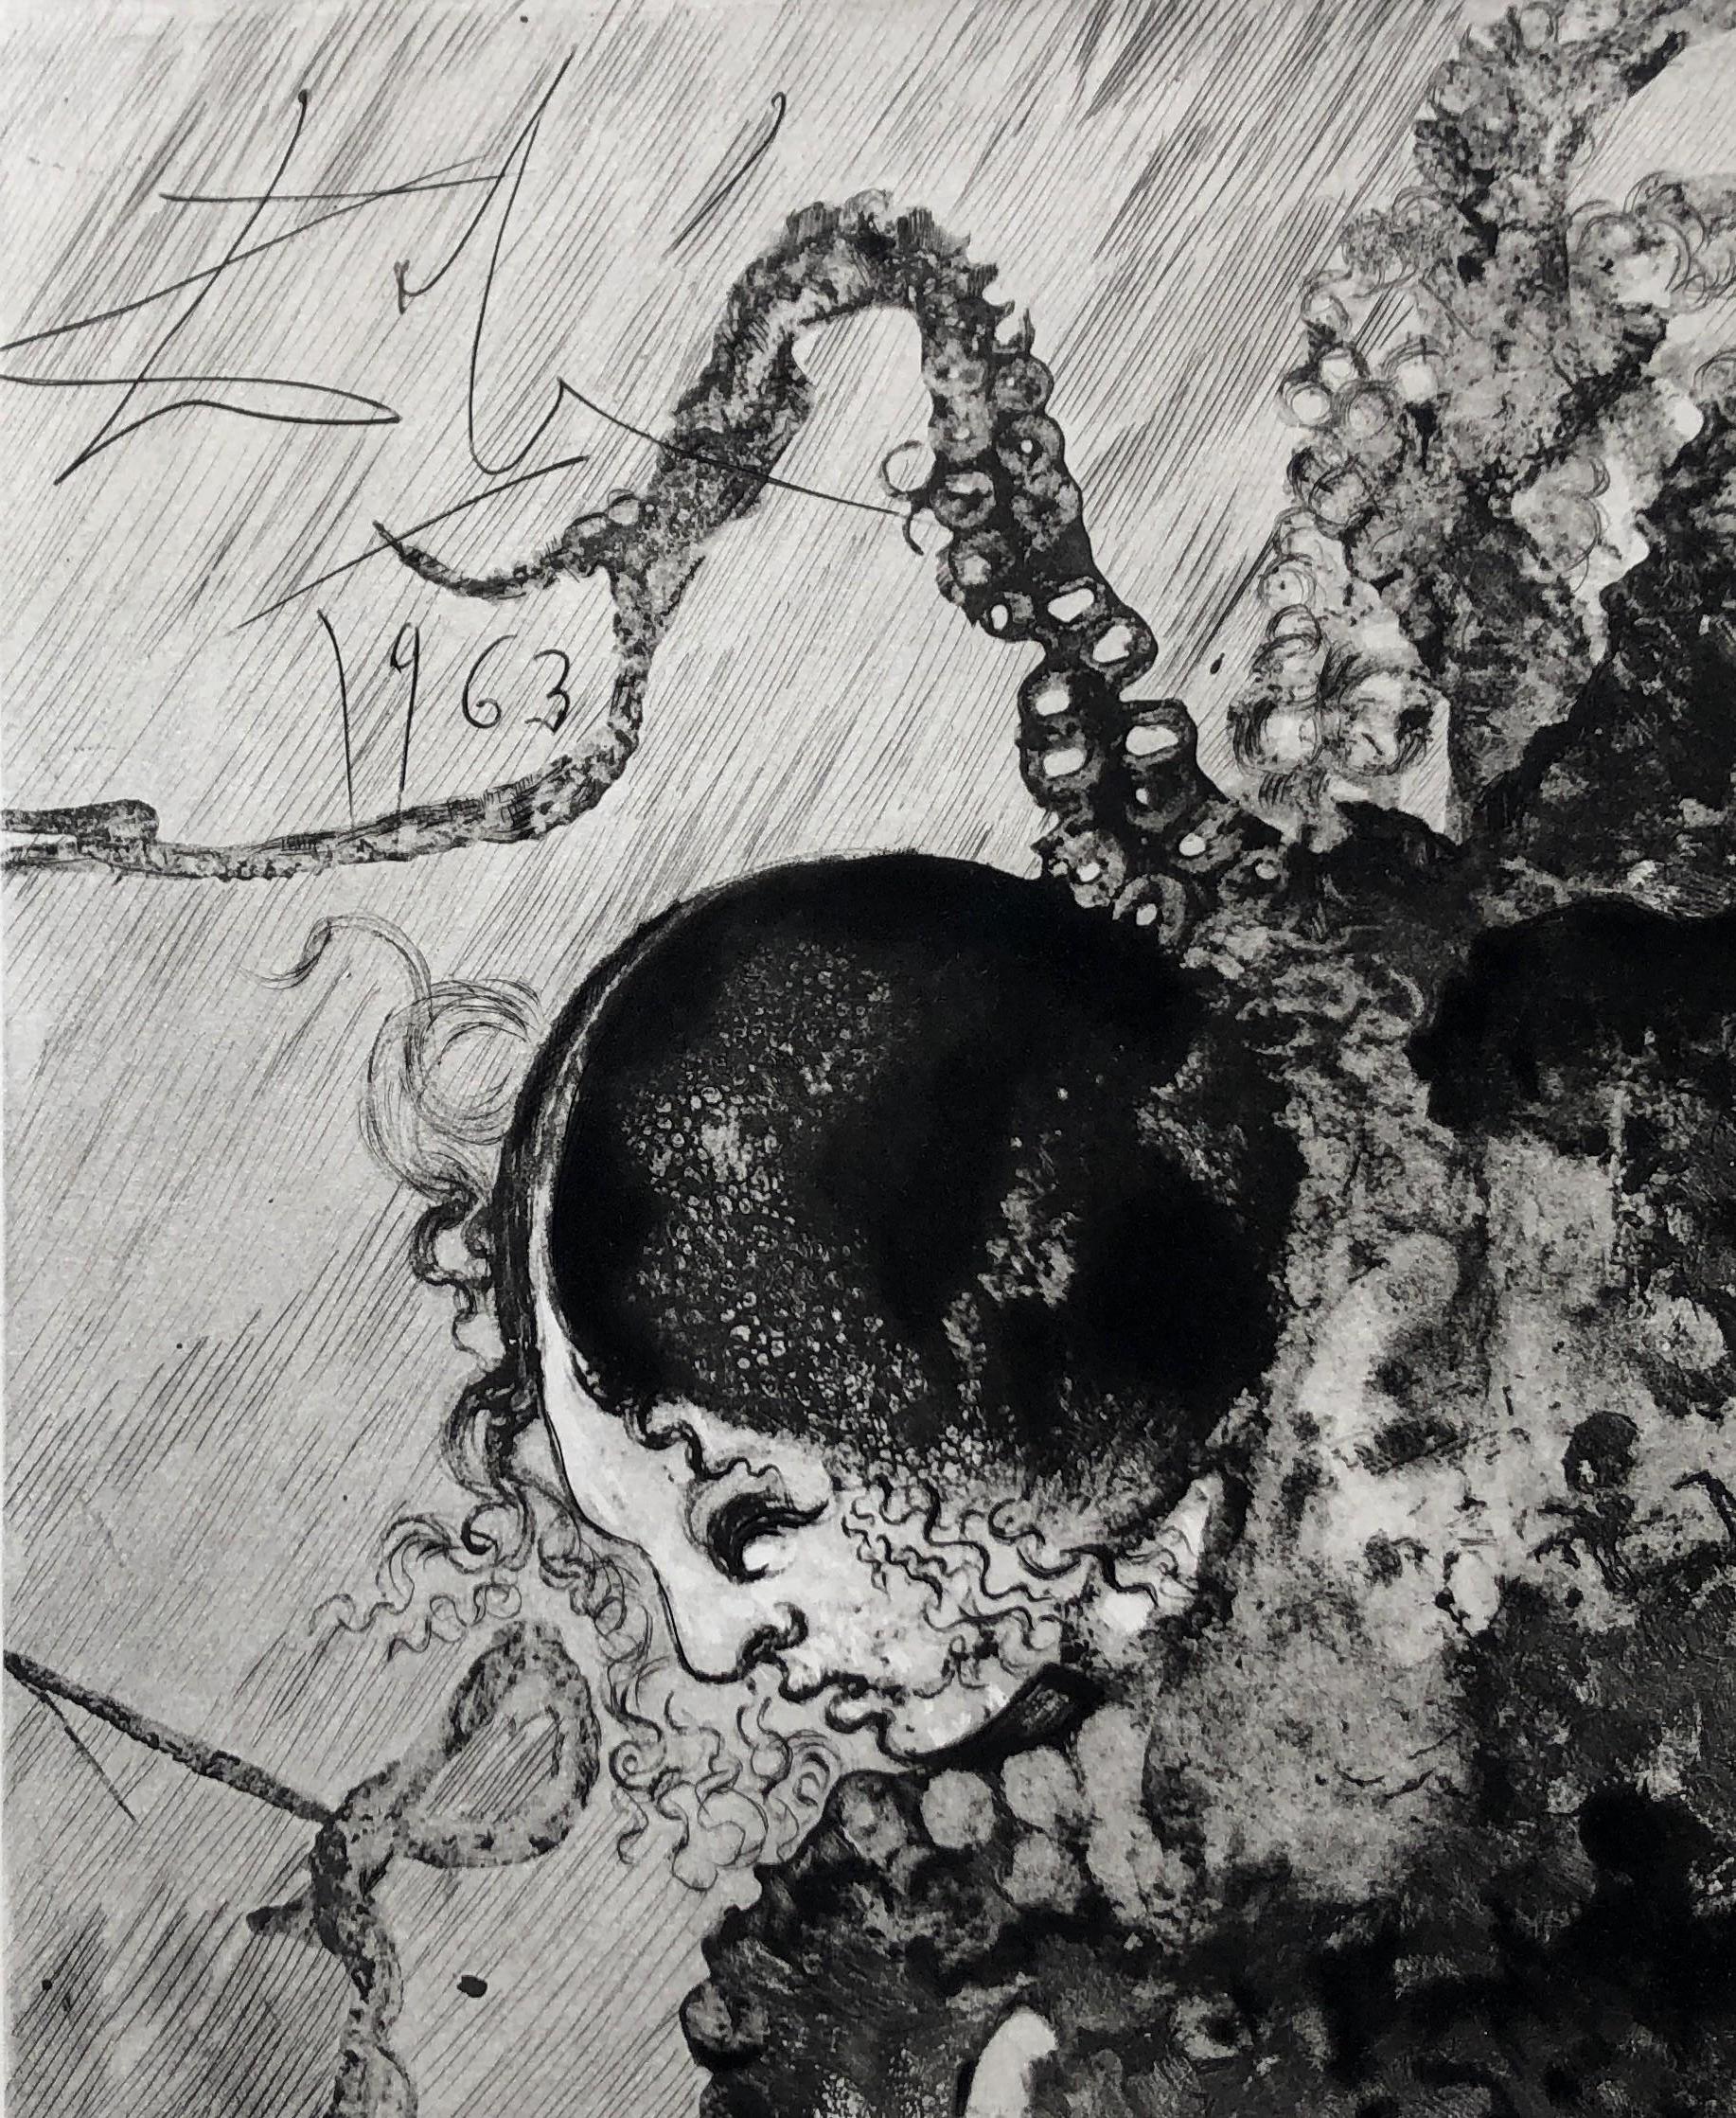 Medusa - Original Etching Handsigned - Mythology - 150 copies - Gray Figurative Print by Salvador Dalí